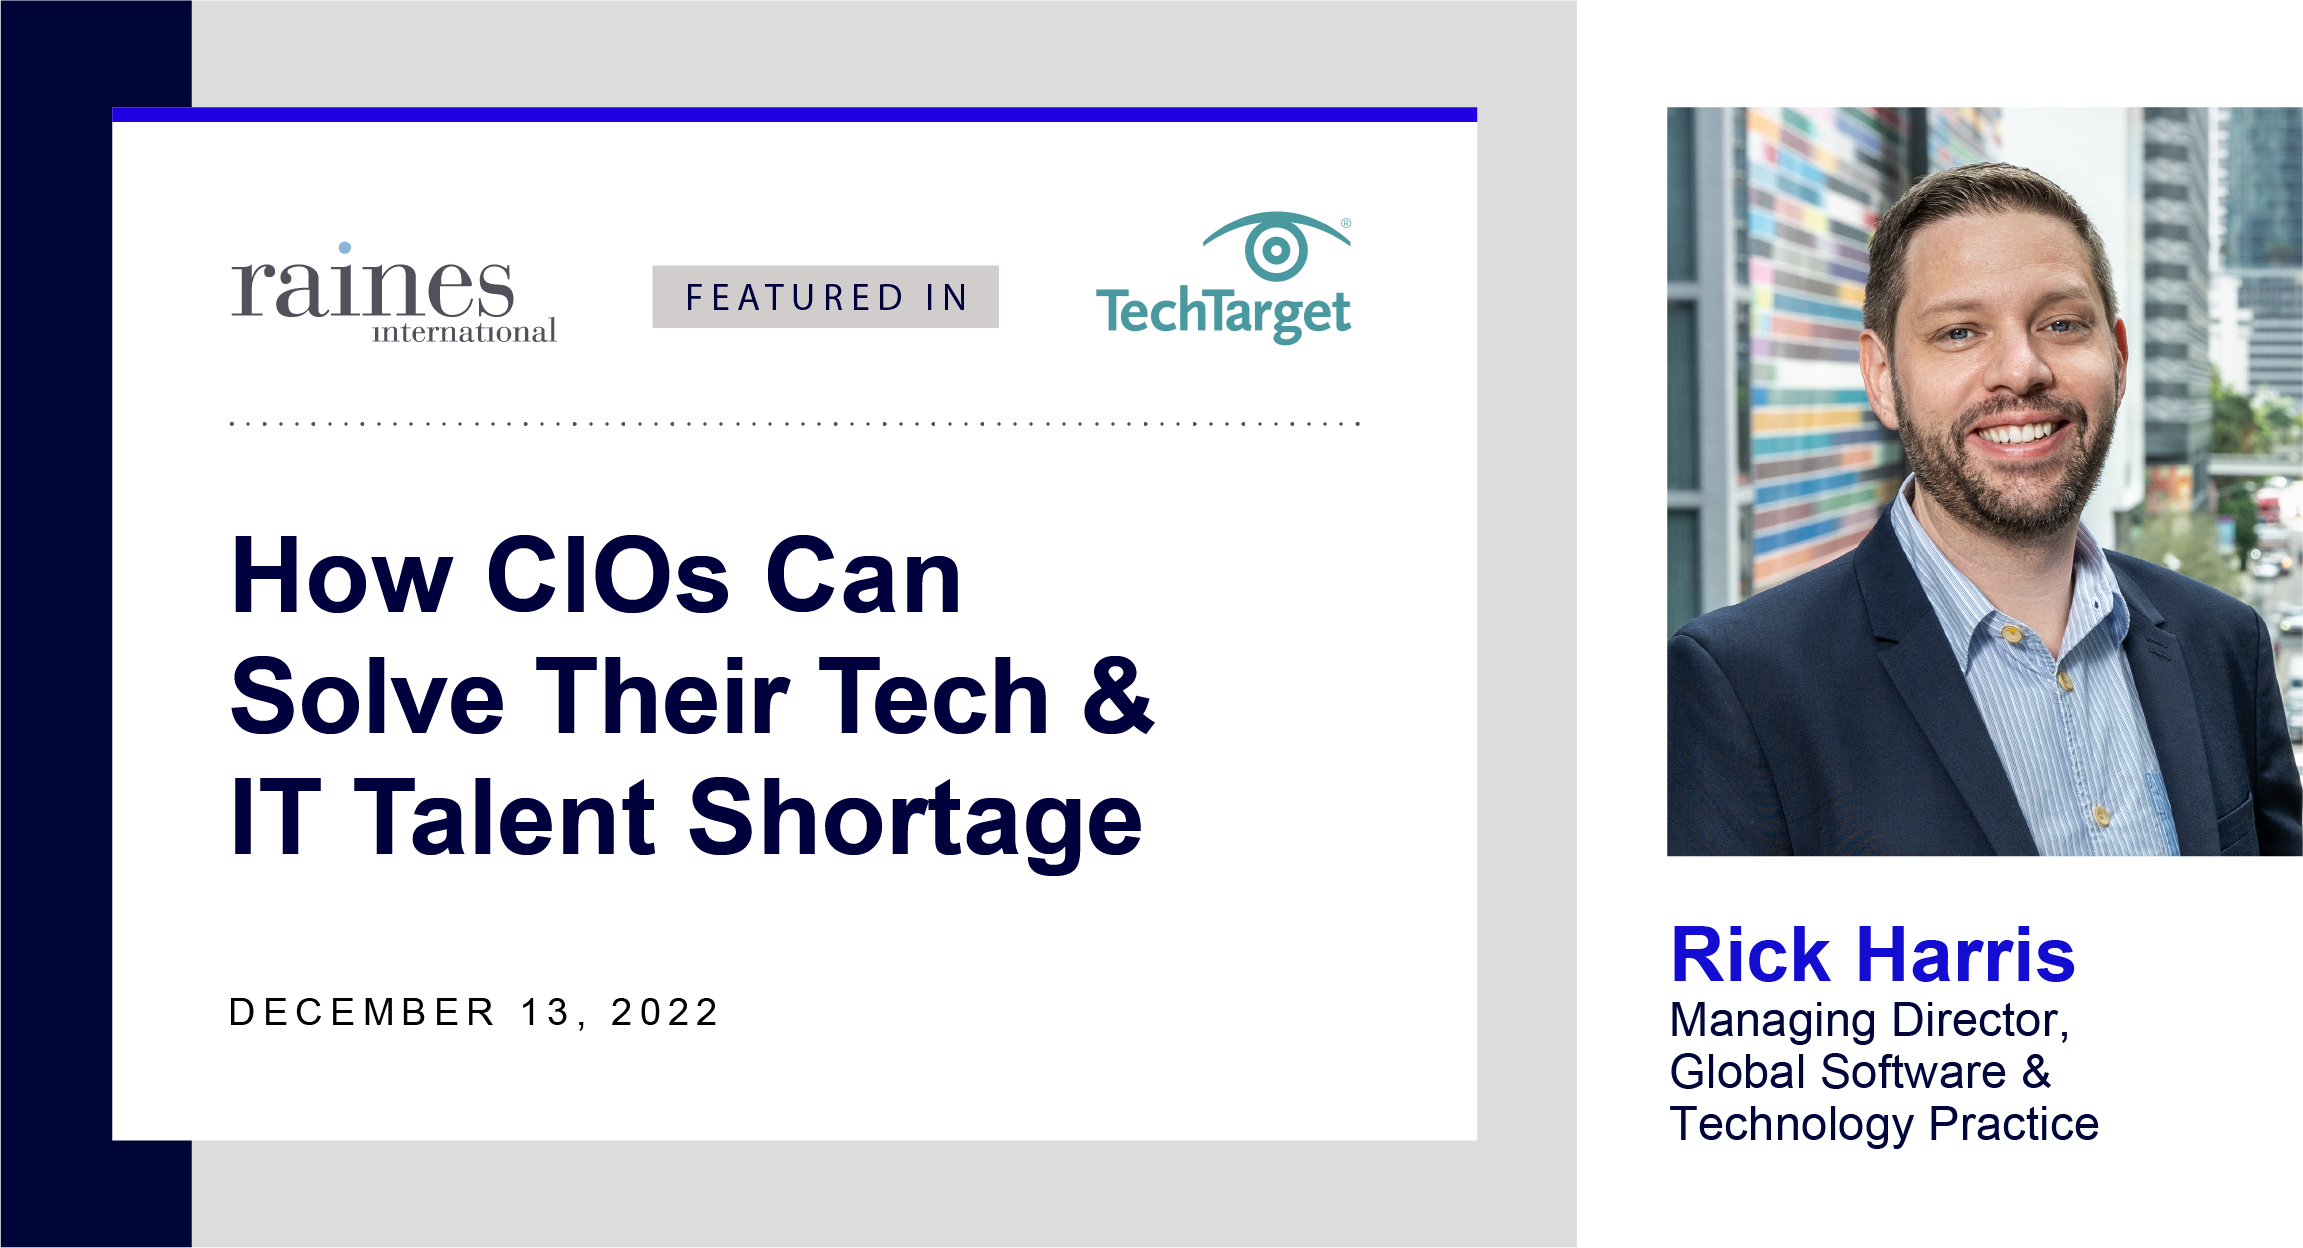 Tech Target logo, Rick Harris, IT Talent shortage headline